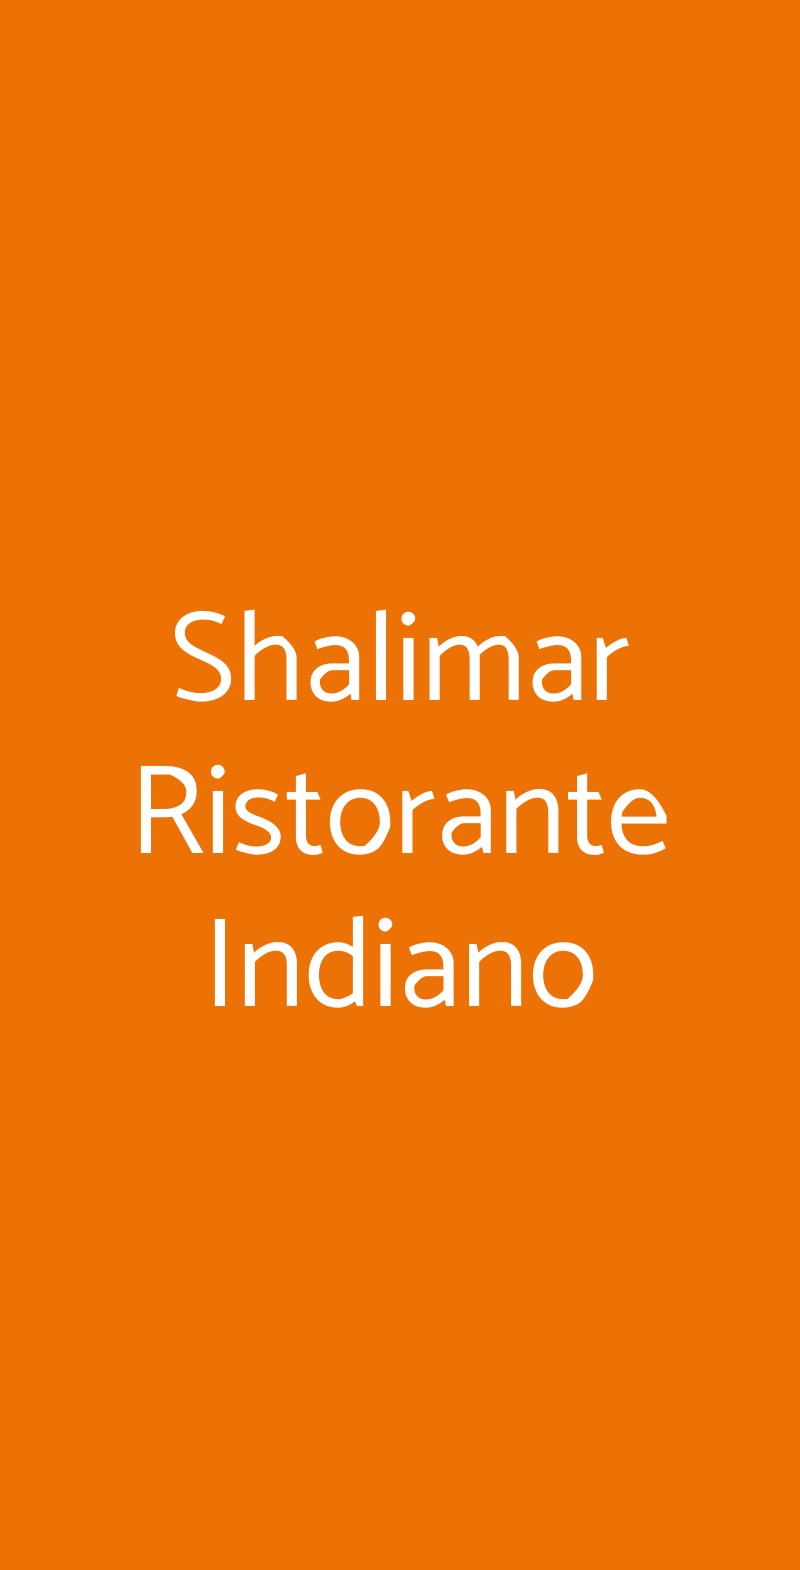 Shalimar Ristorante Indiano Savona menù 1 pagina